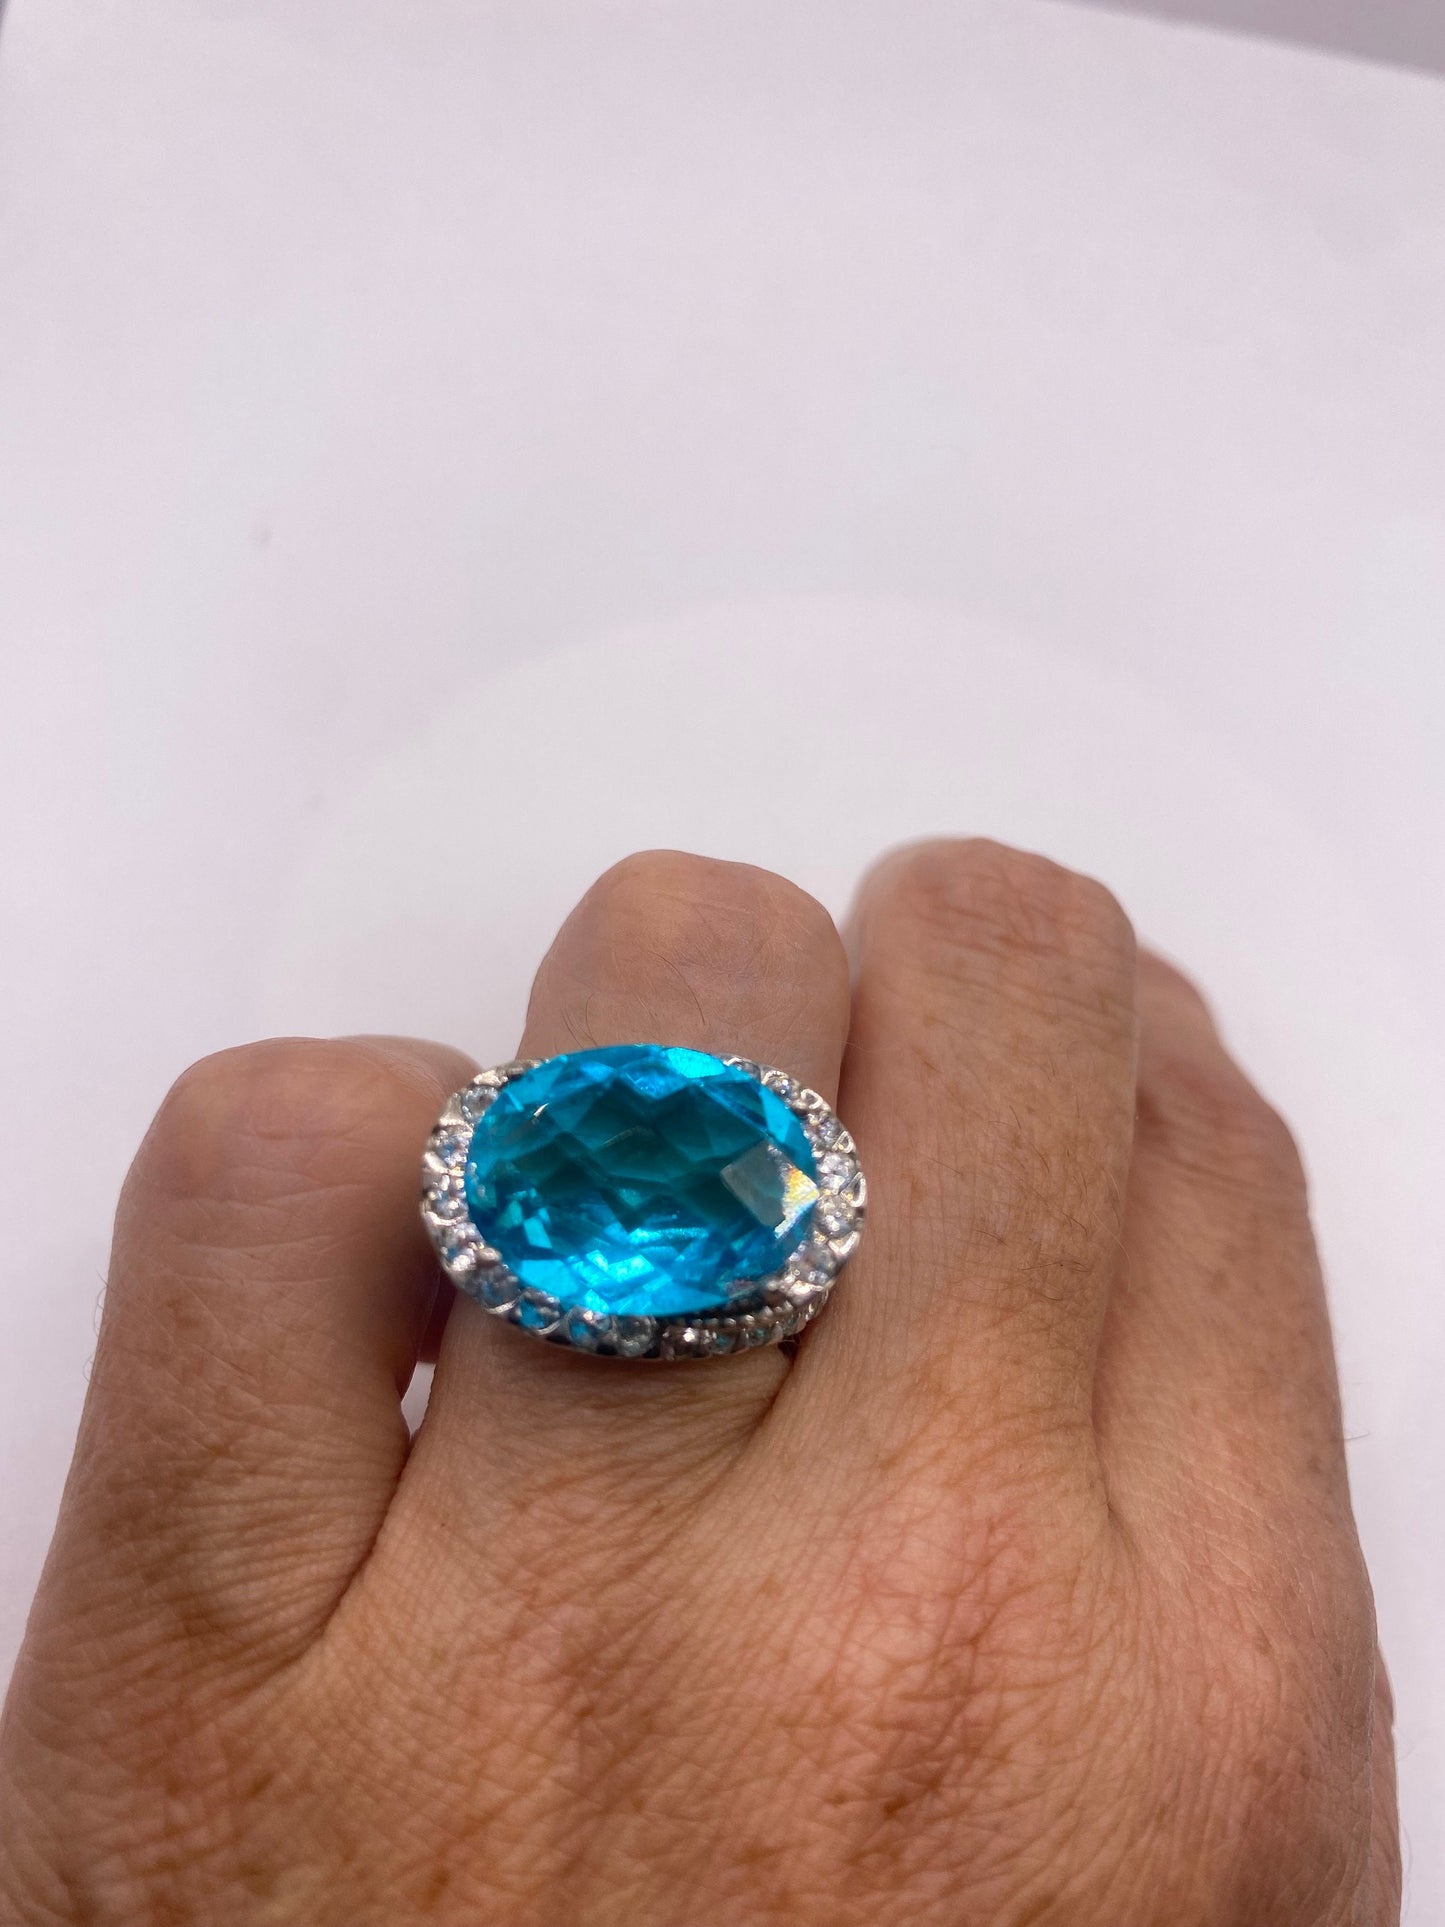 Vintage Blue Fluorite 925 Sterling Silver Cocktail Ring Size 6.5